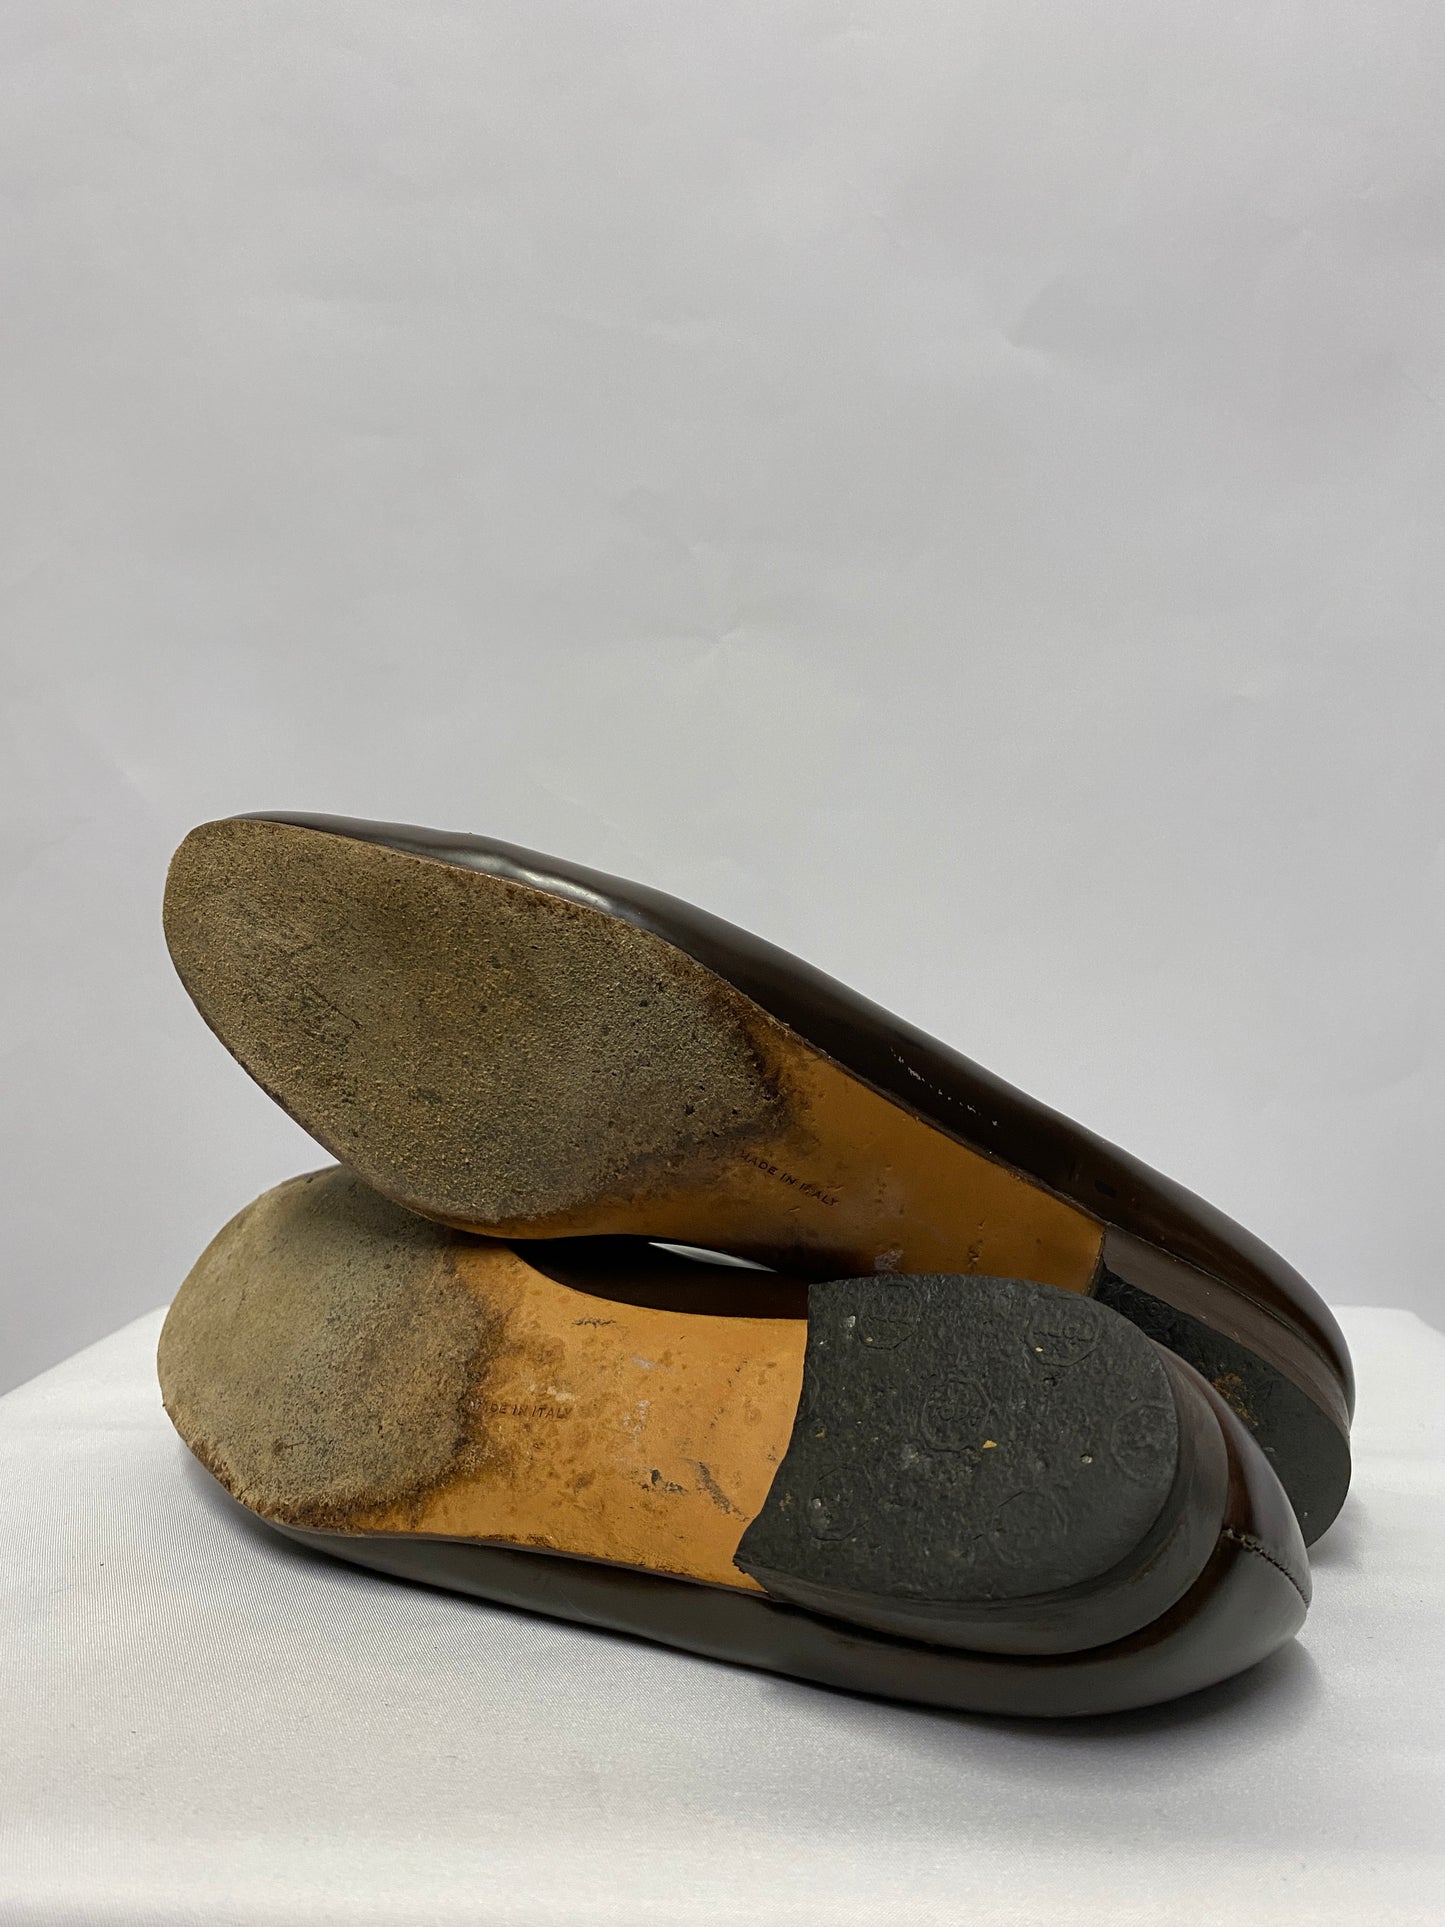 Salvatore Ferragamo Brown Leather Slip On Shoes 5